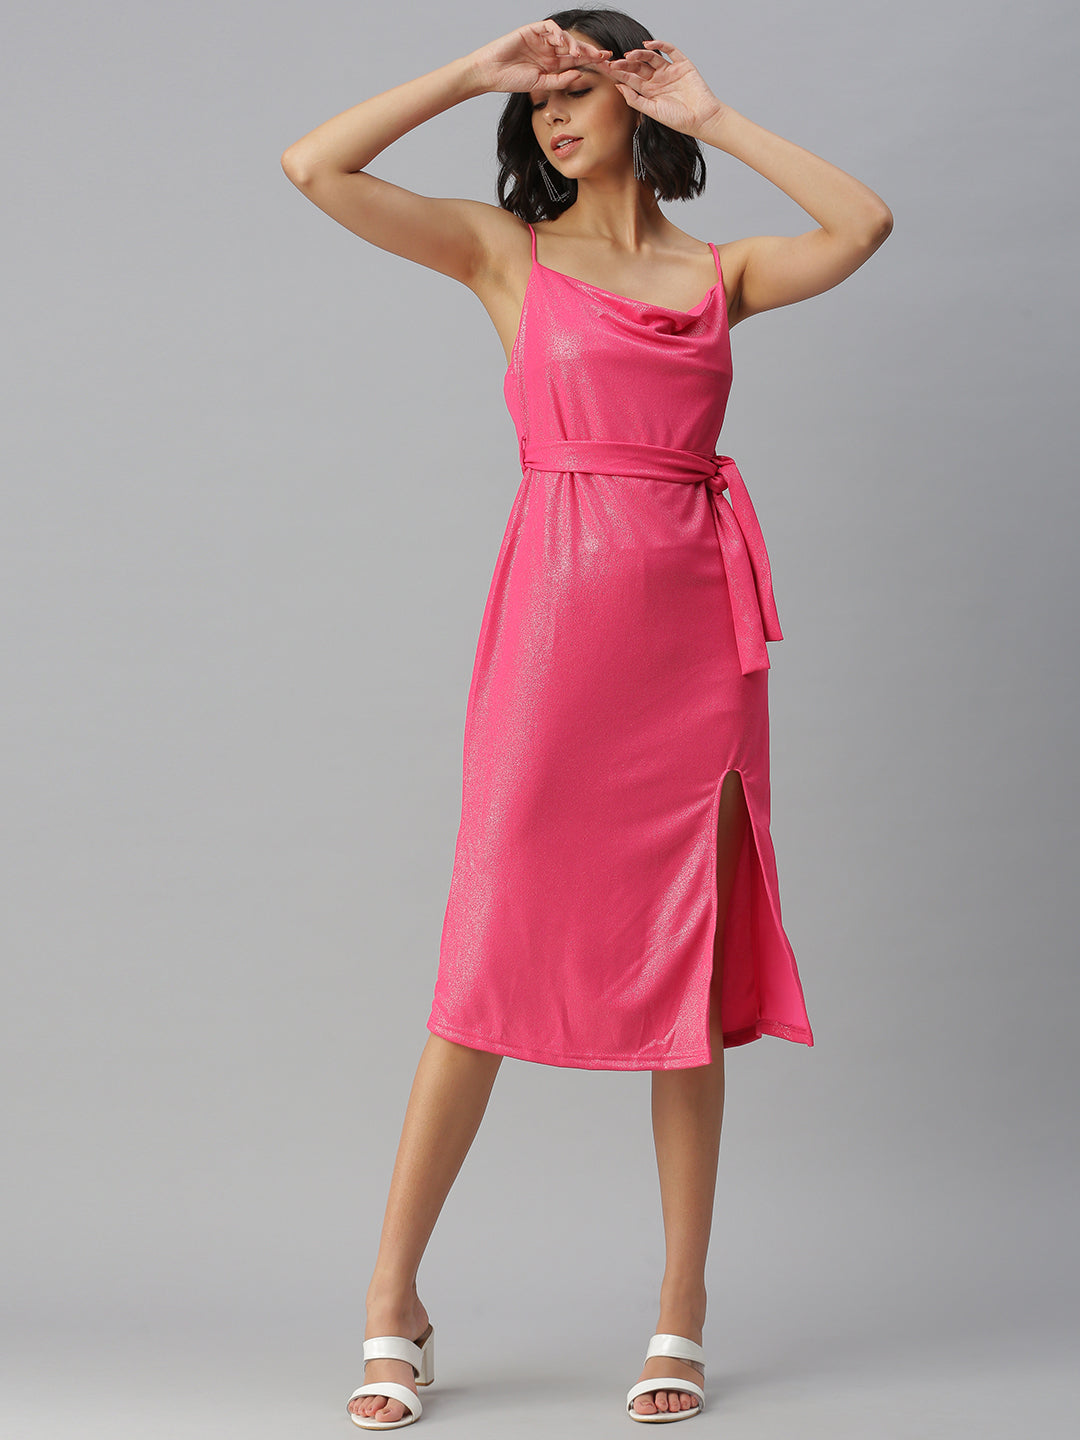 Women's Pink Solid Sheath Dress